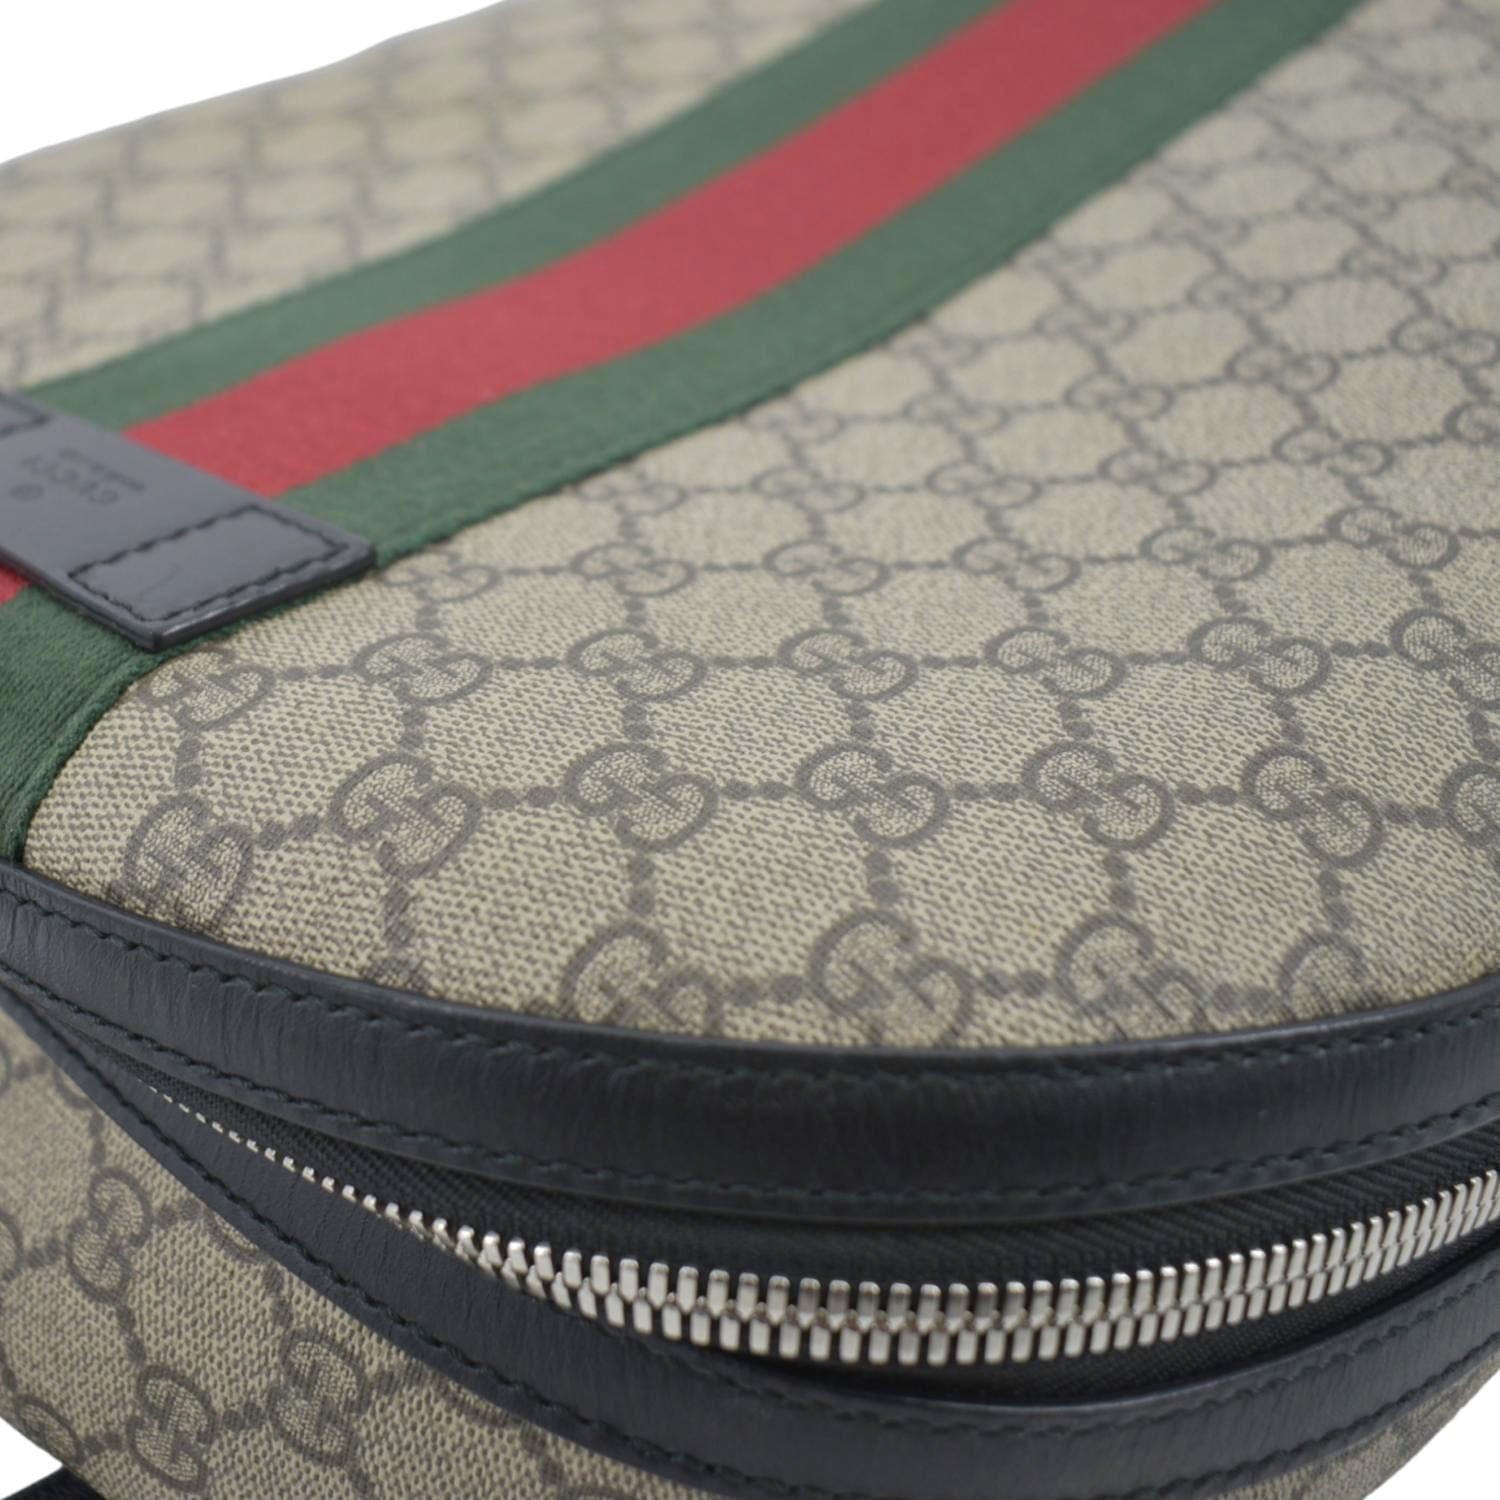 Gucci - Vintage Beige Monogram Canvas Web Handbag Briefcase - Catawiki